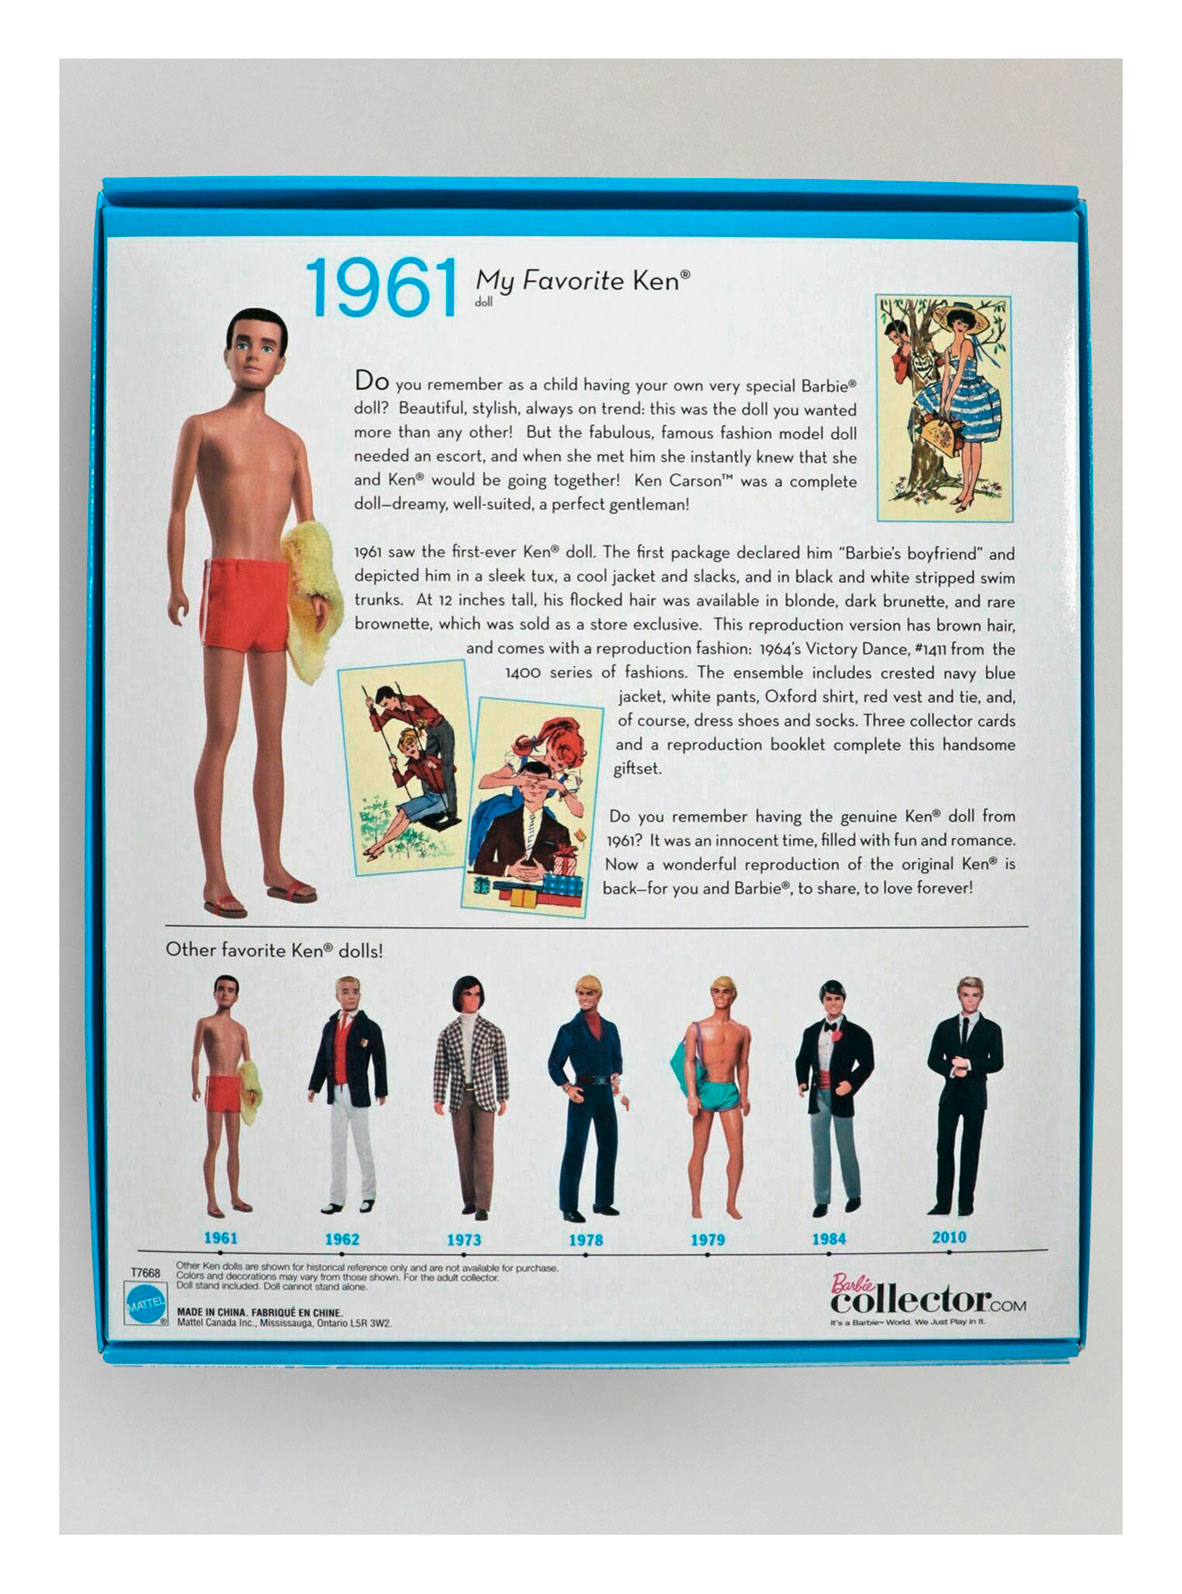 2011 My Favorite Ken (Ken 50th Anniversary) original packaging